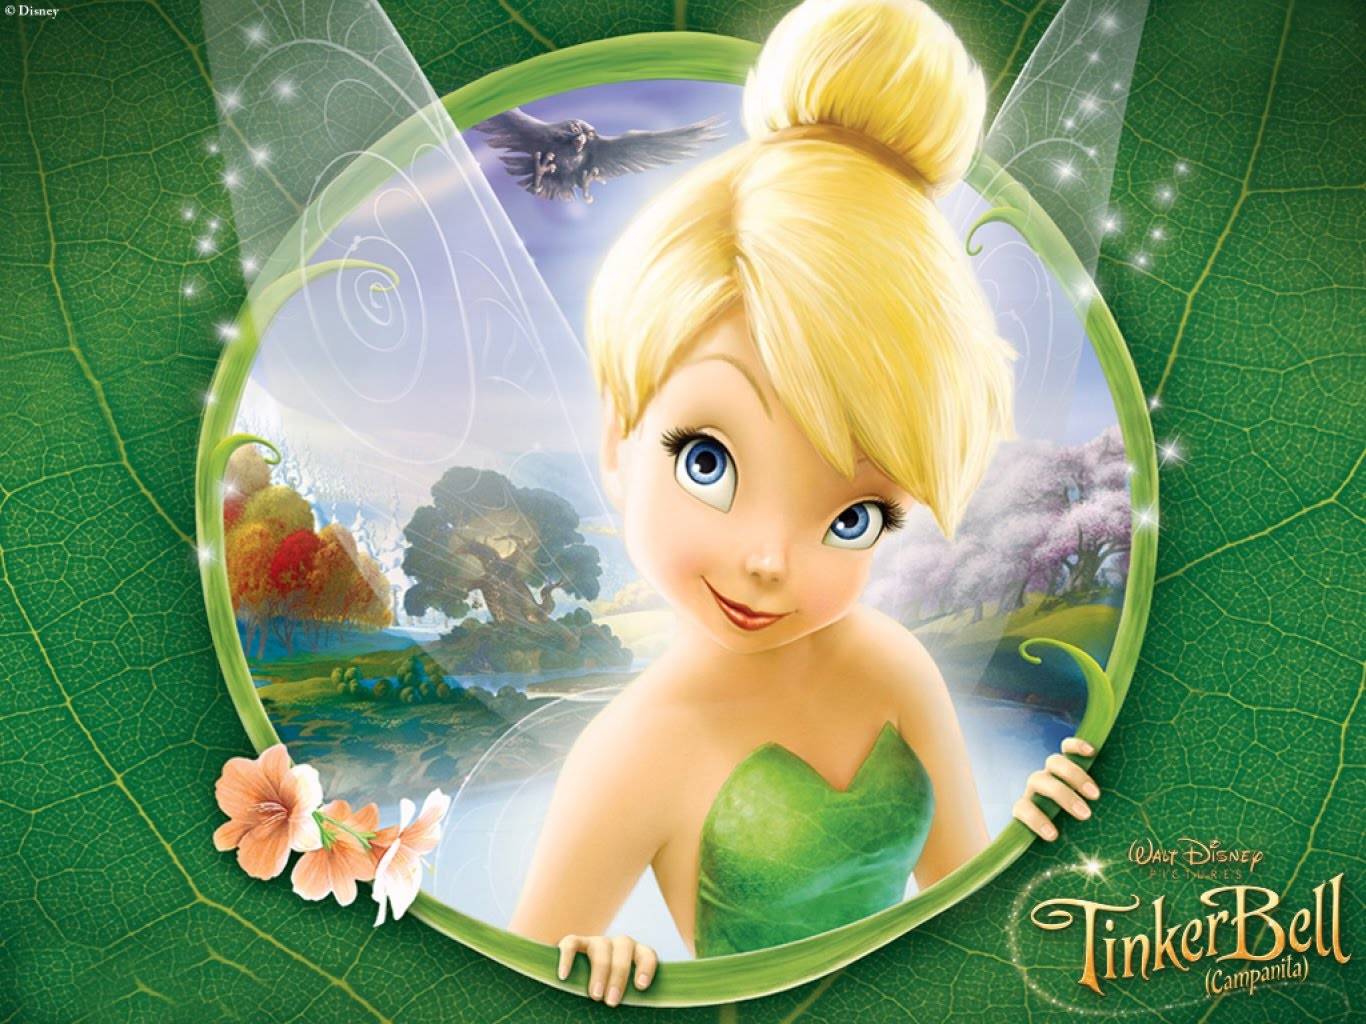 Tinkerbell Wallpaper Disney